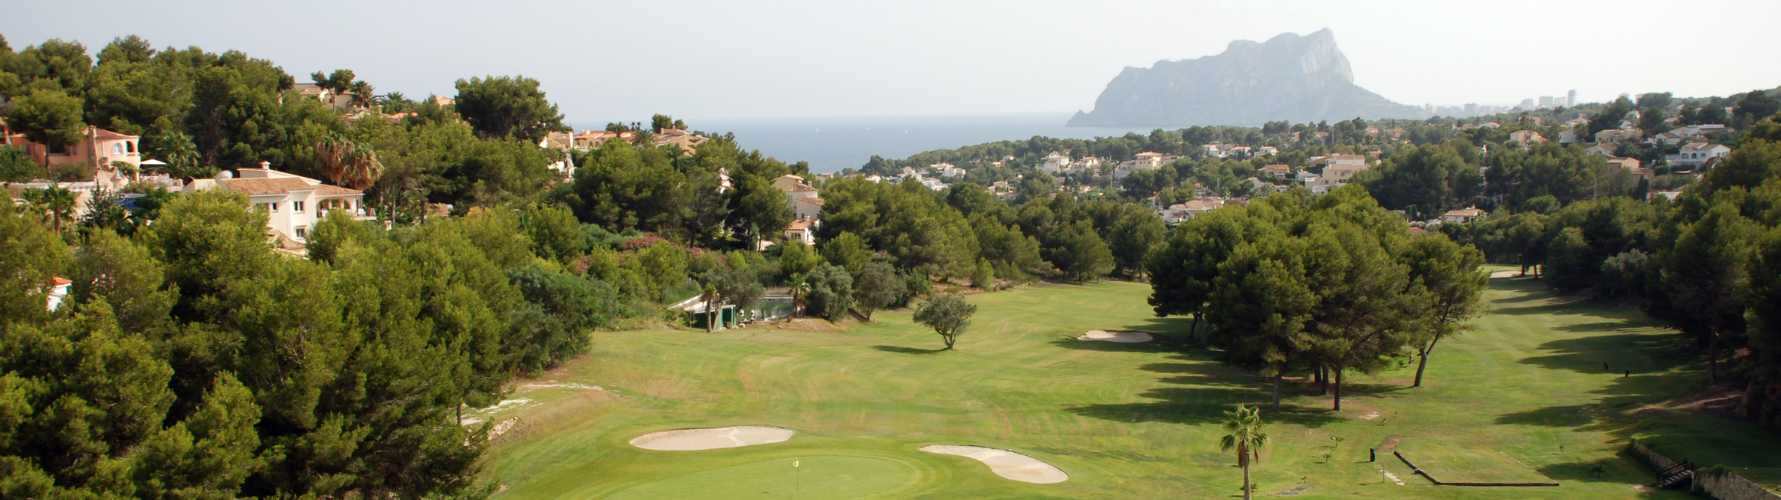 golf comunitat valenciana